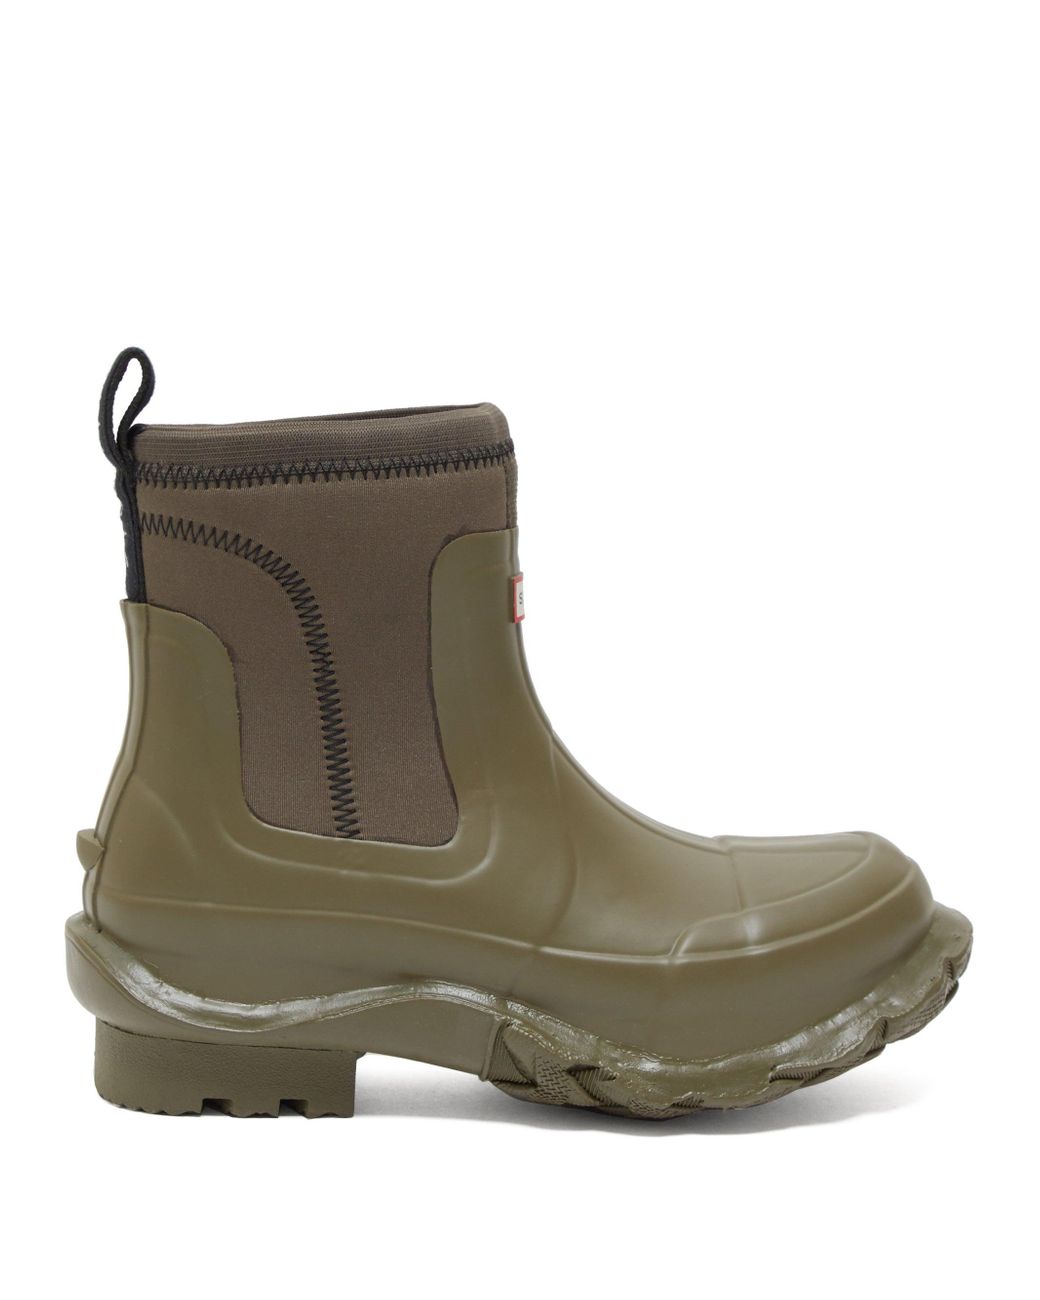 Stella McCartney X Hunter Rubber Rain Boots | Lyst